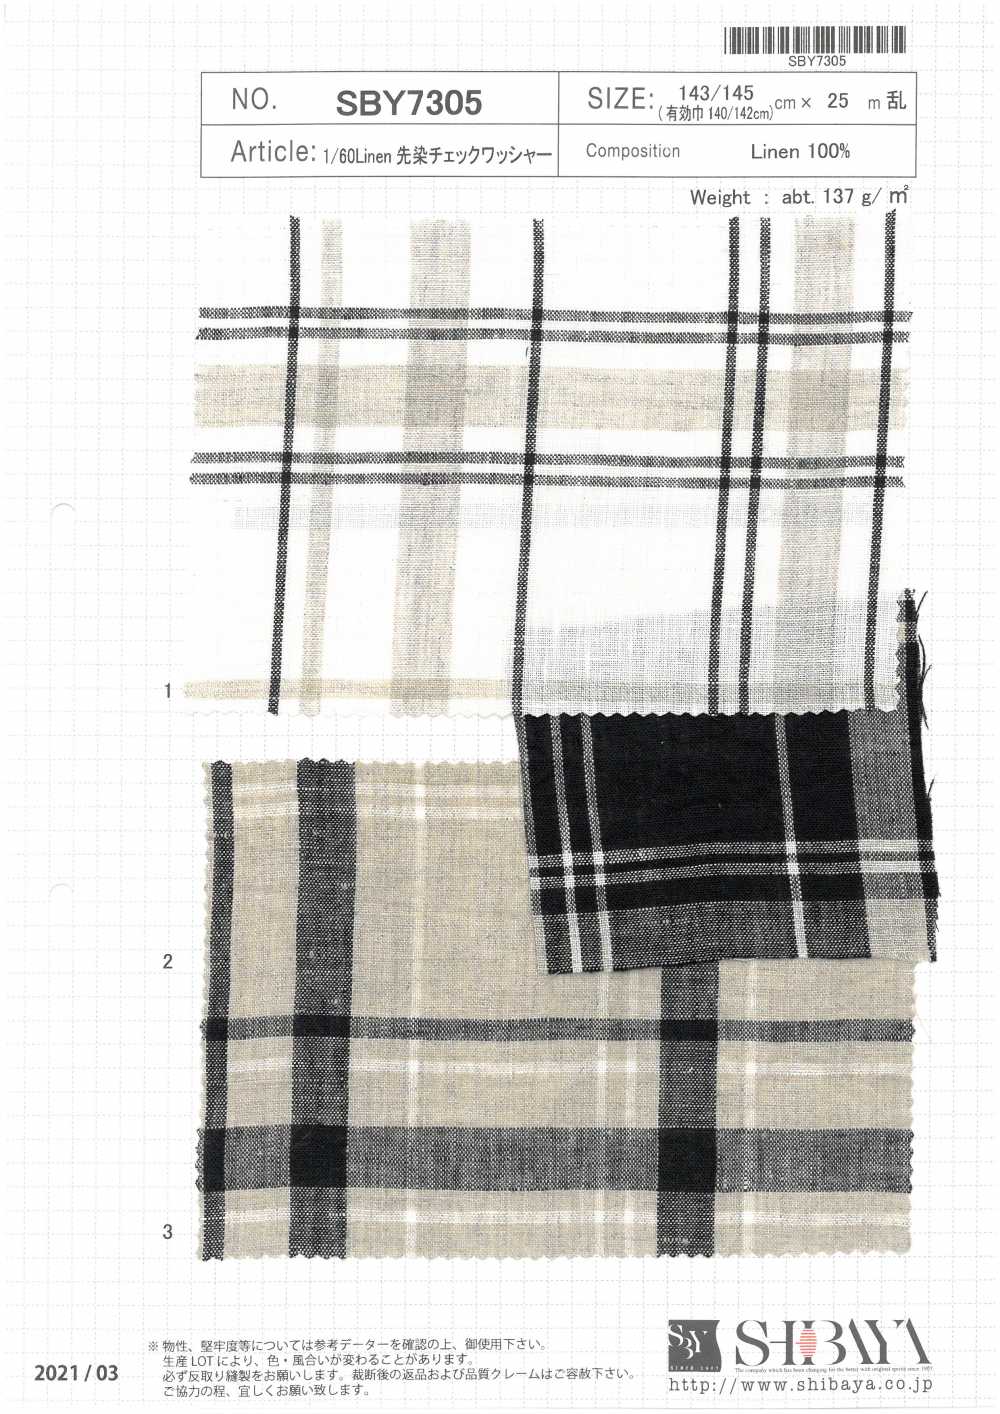 SBY7305 1/60 Linen Yarn Dyed Check Washer[Textile / Fabric] SHIBAYA